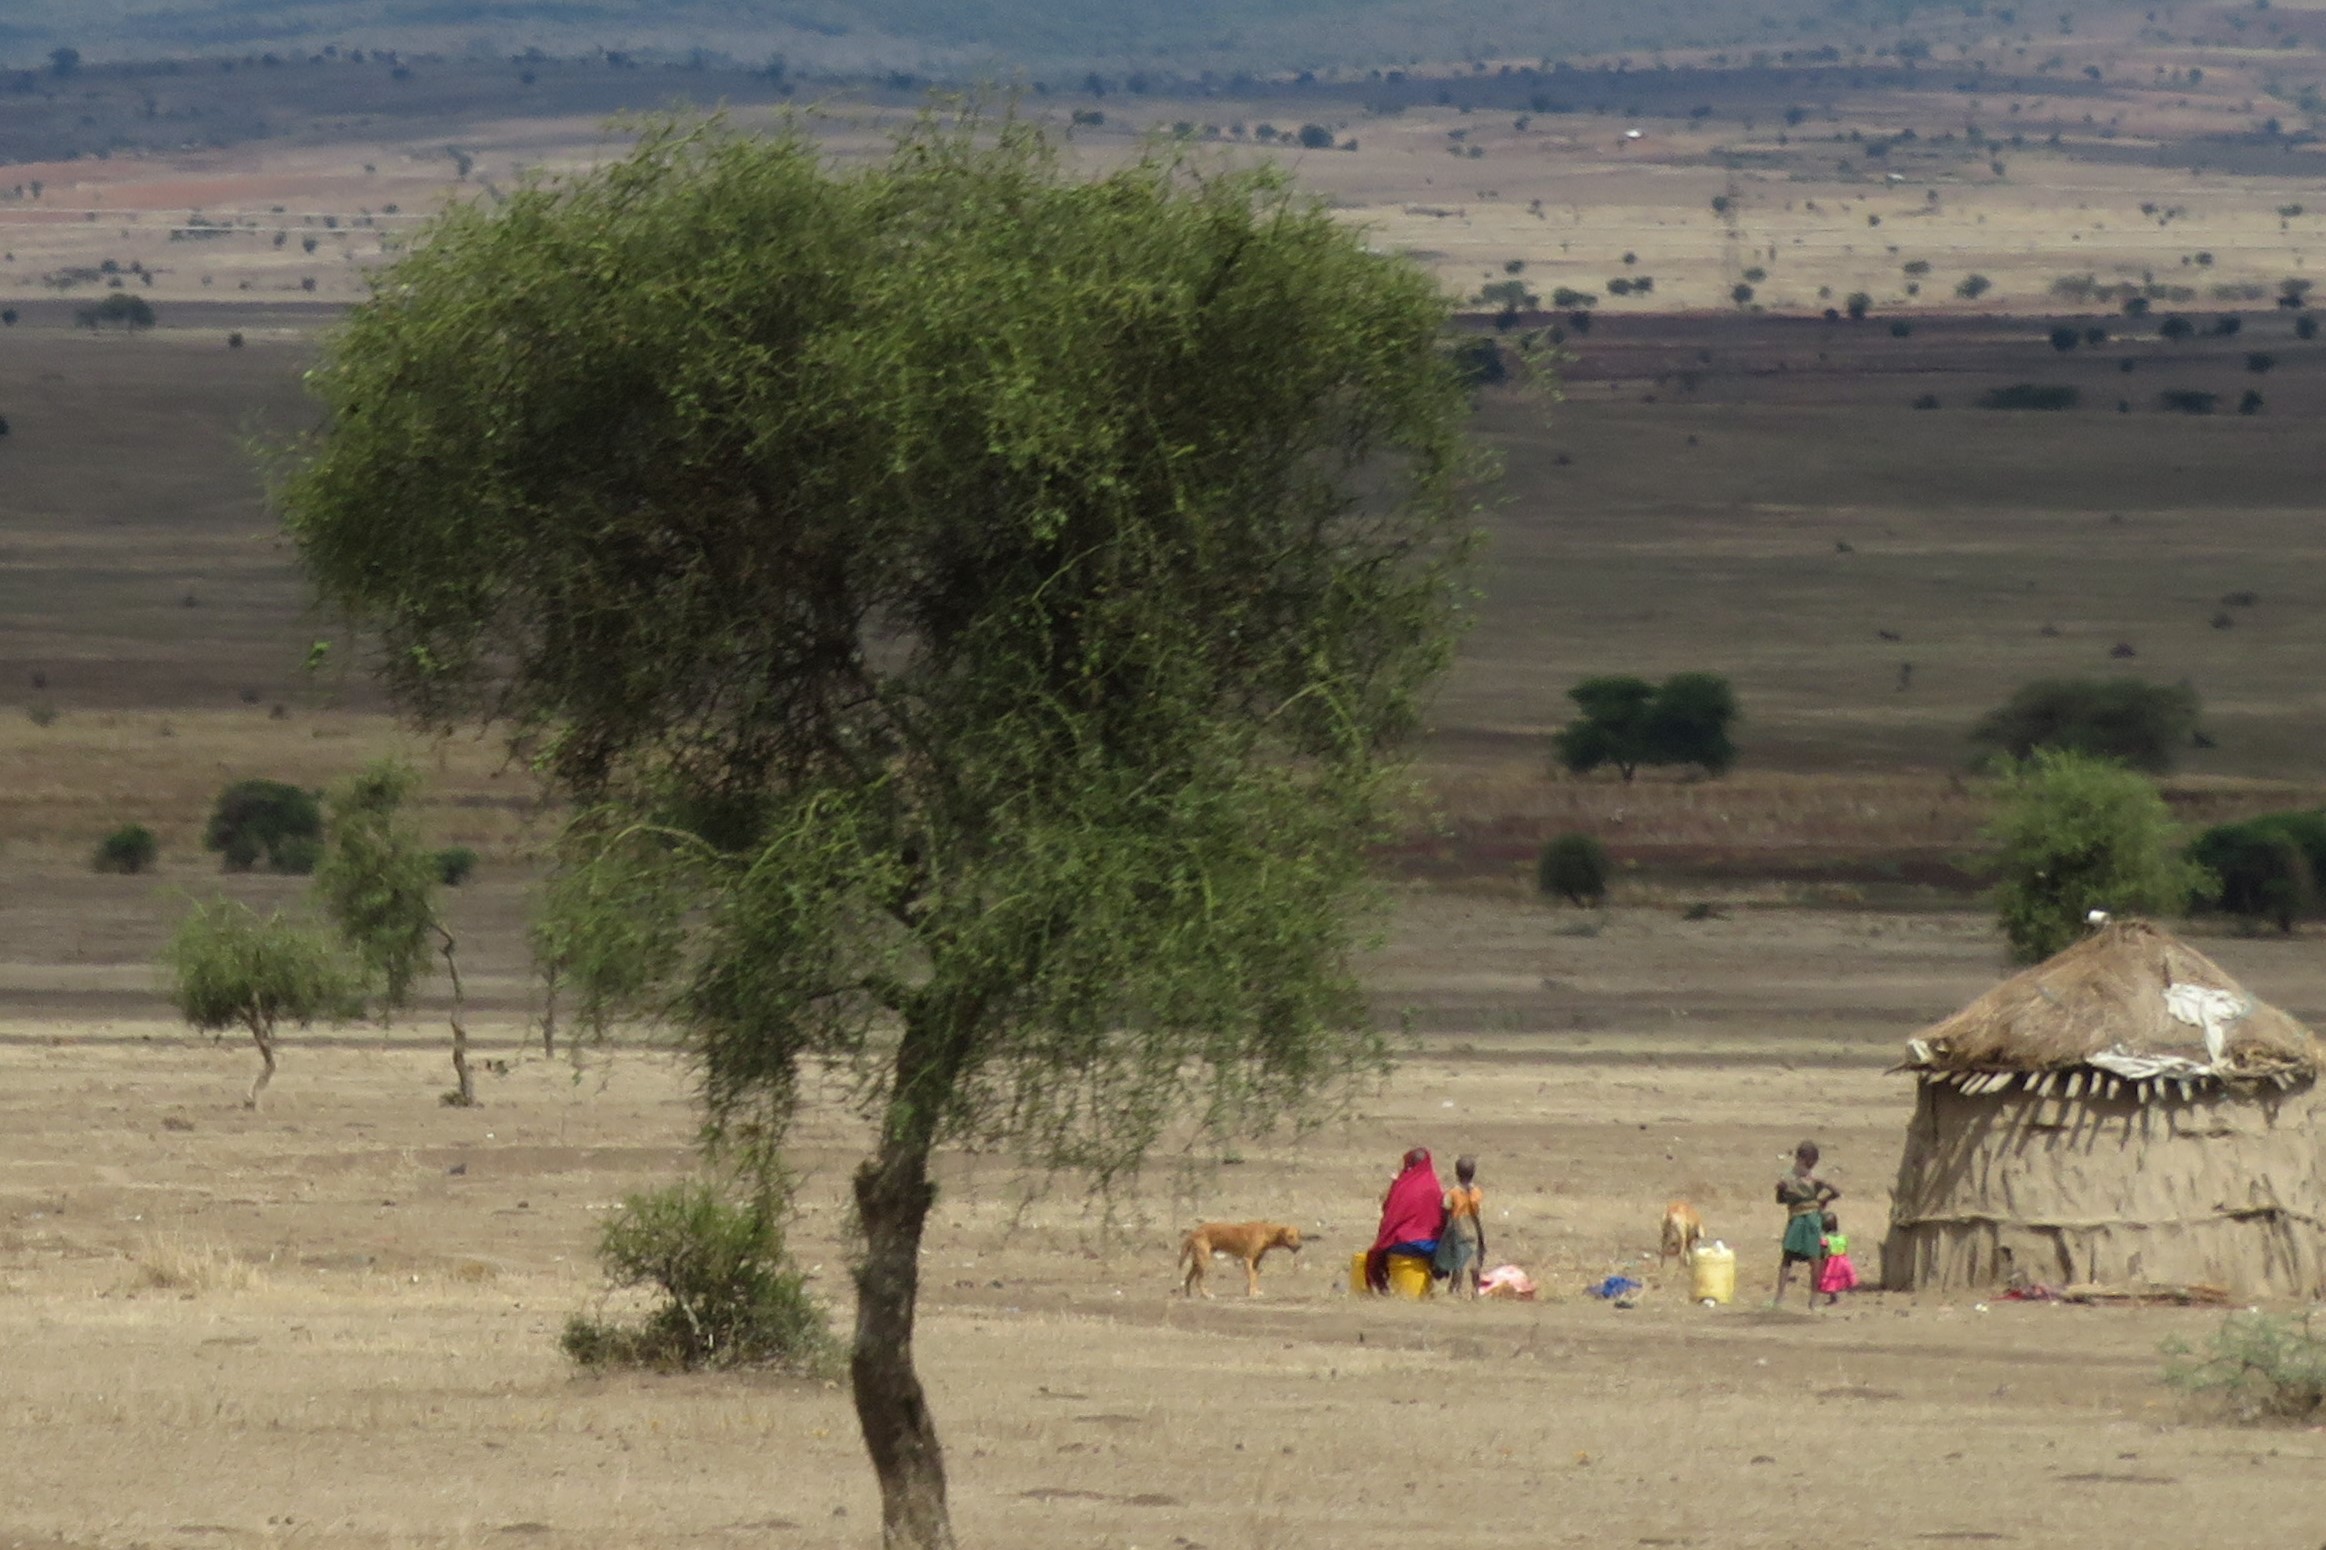 Maasai women and children